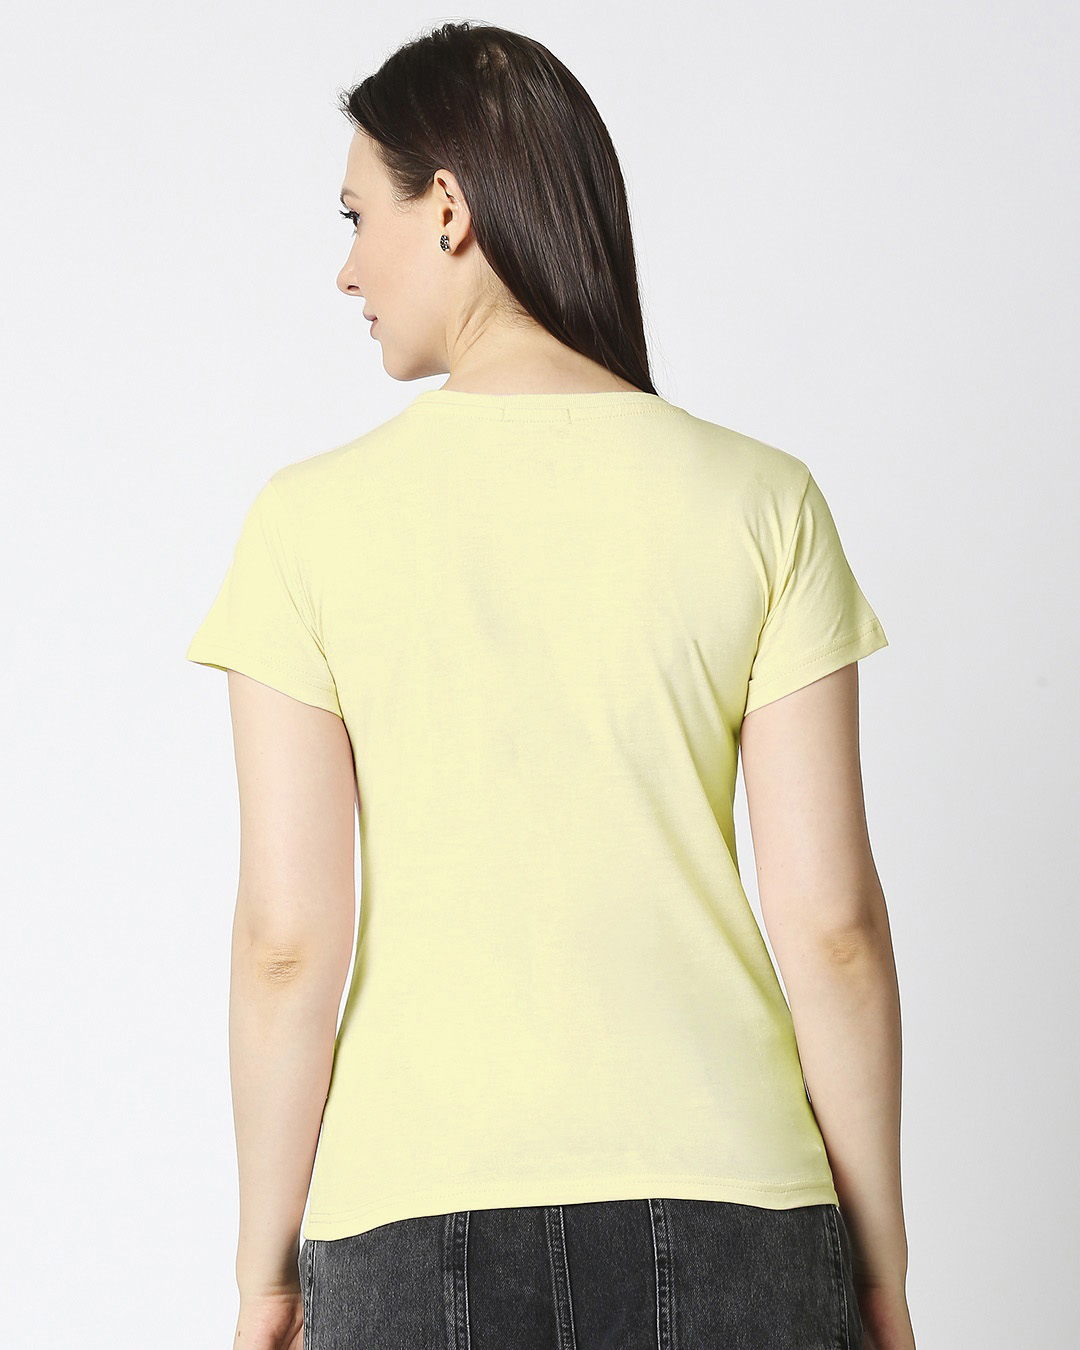 Shop Wink New Half Sleeve Printed T-Shirt Yellow-Back